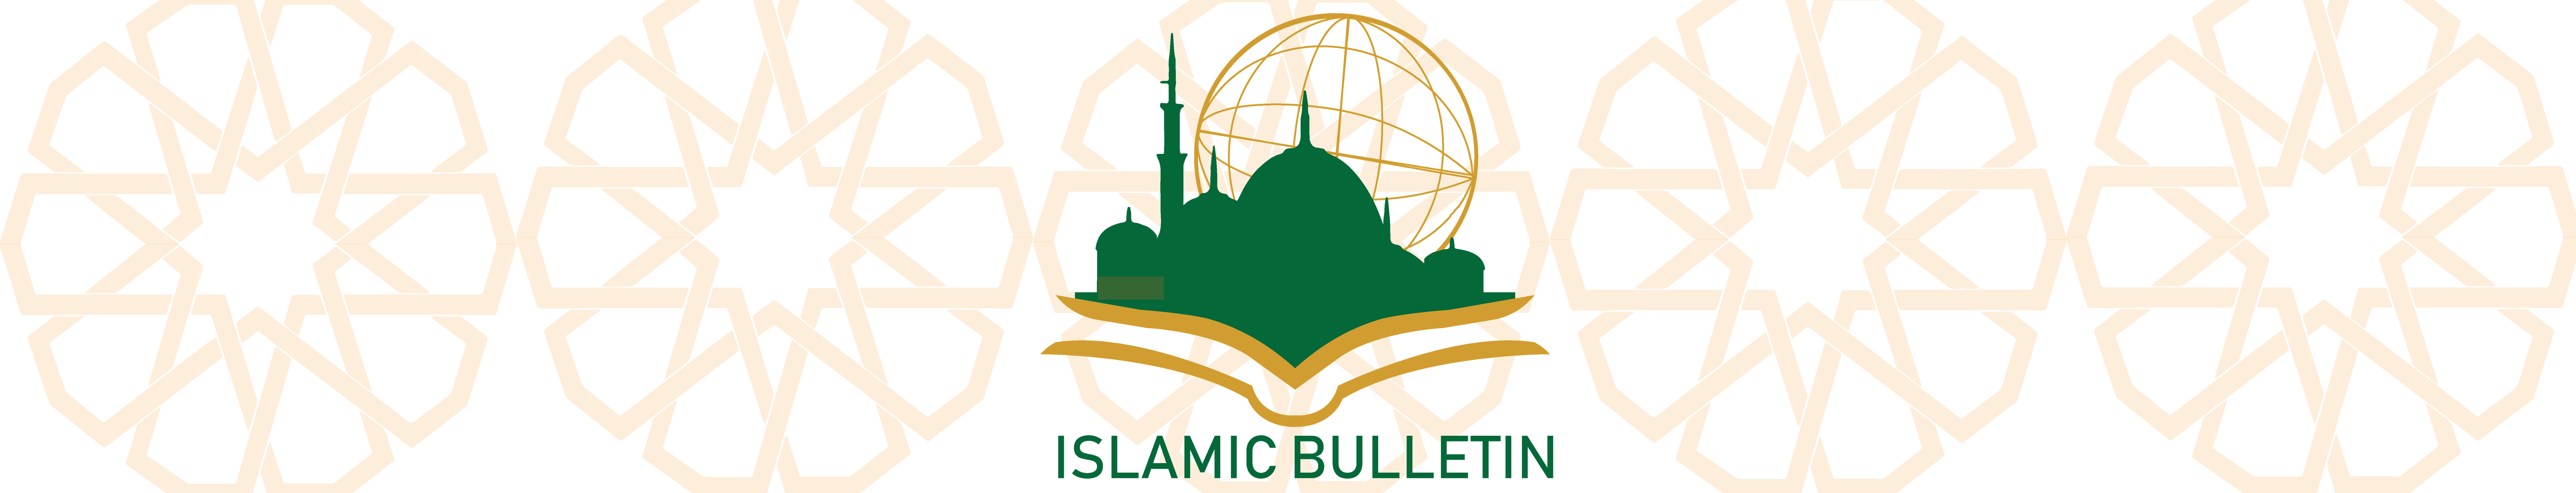 Islamic Bulletin Banner